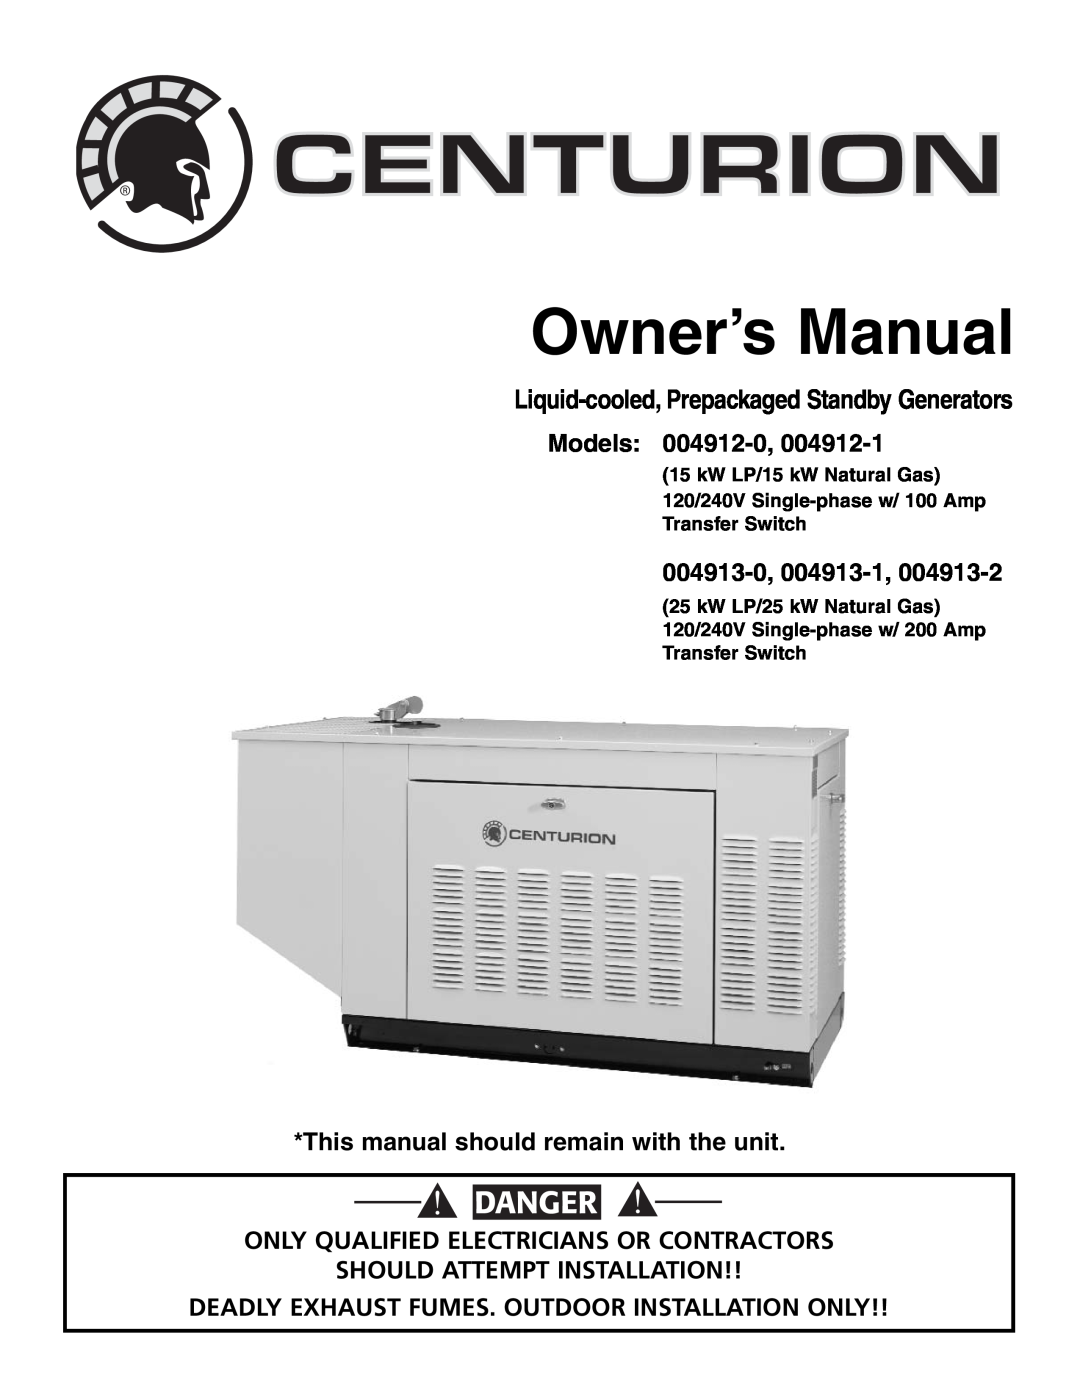 Generac 004912-0, 004912-1, 004913-0, 004913-1, 004913-2 owner manual Centurion, Owner’s Manual, Danger, Models: 004912-0 